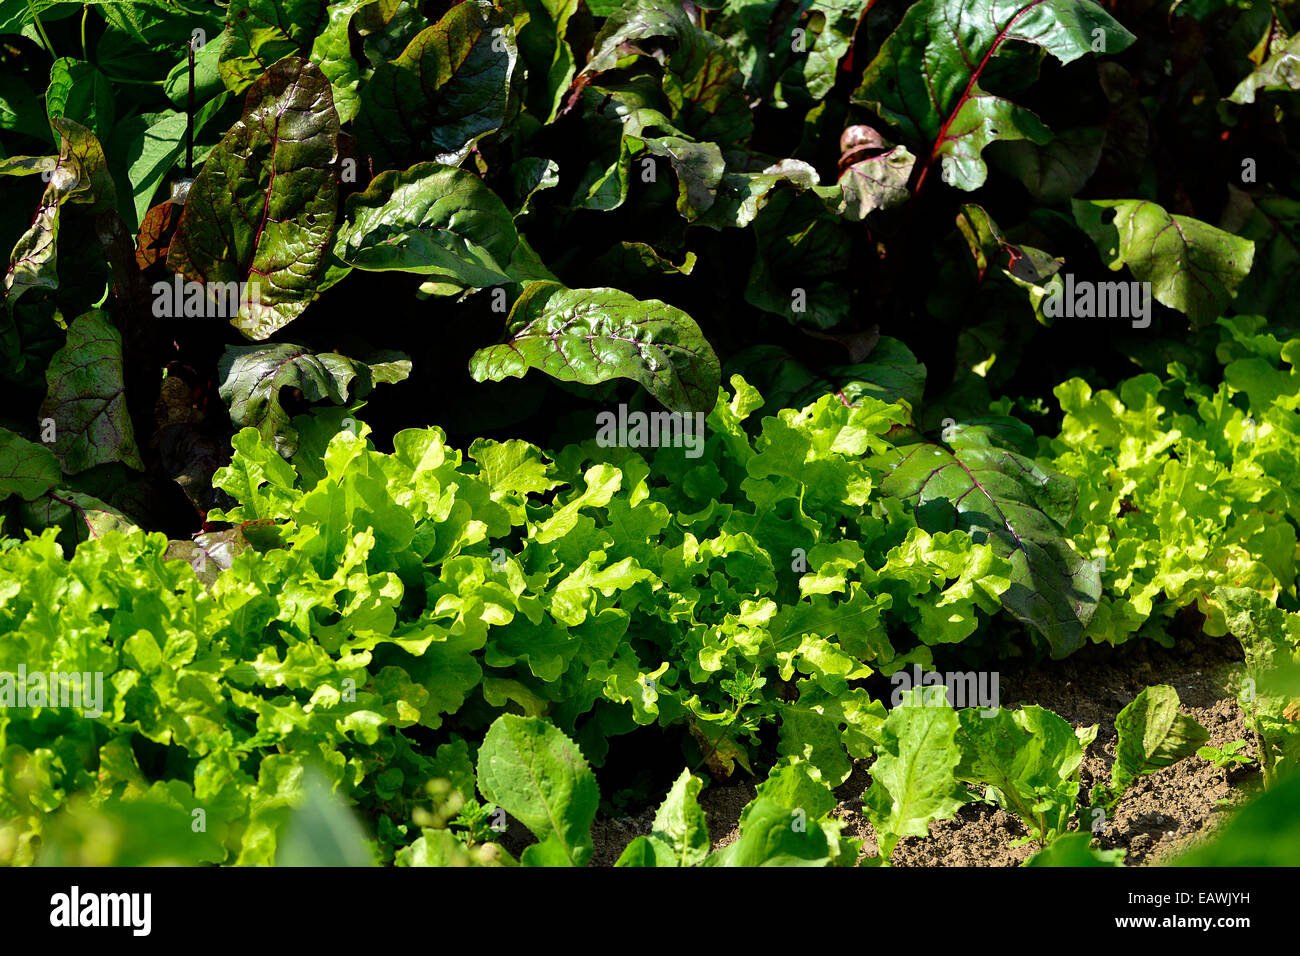 Lettuce 'Feuille de chene' (Lactuca quercina, oak leaf) and red beets (Beta vulgaris var. rubra)  in a garden. Stock Photo